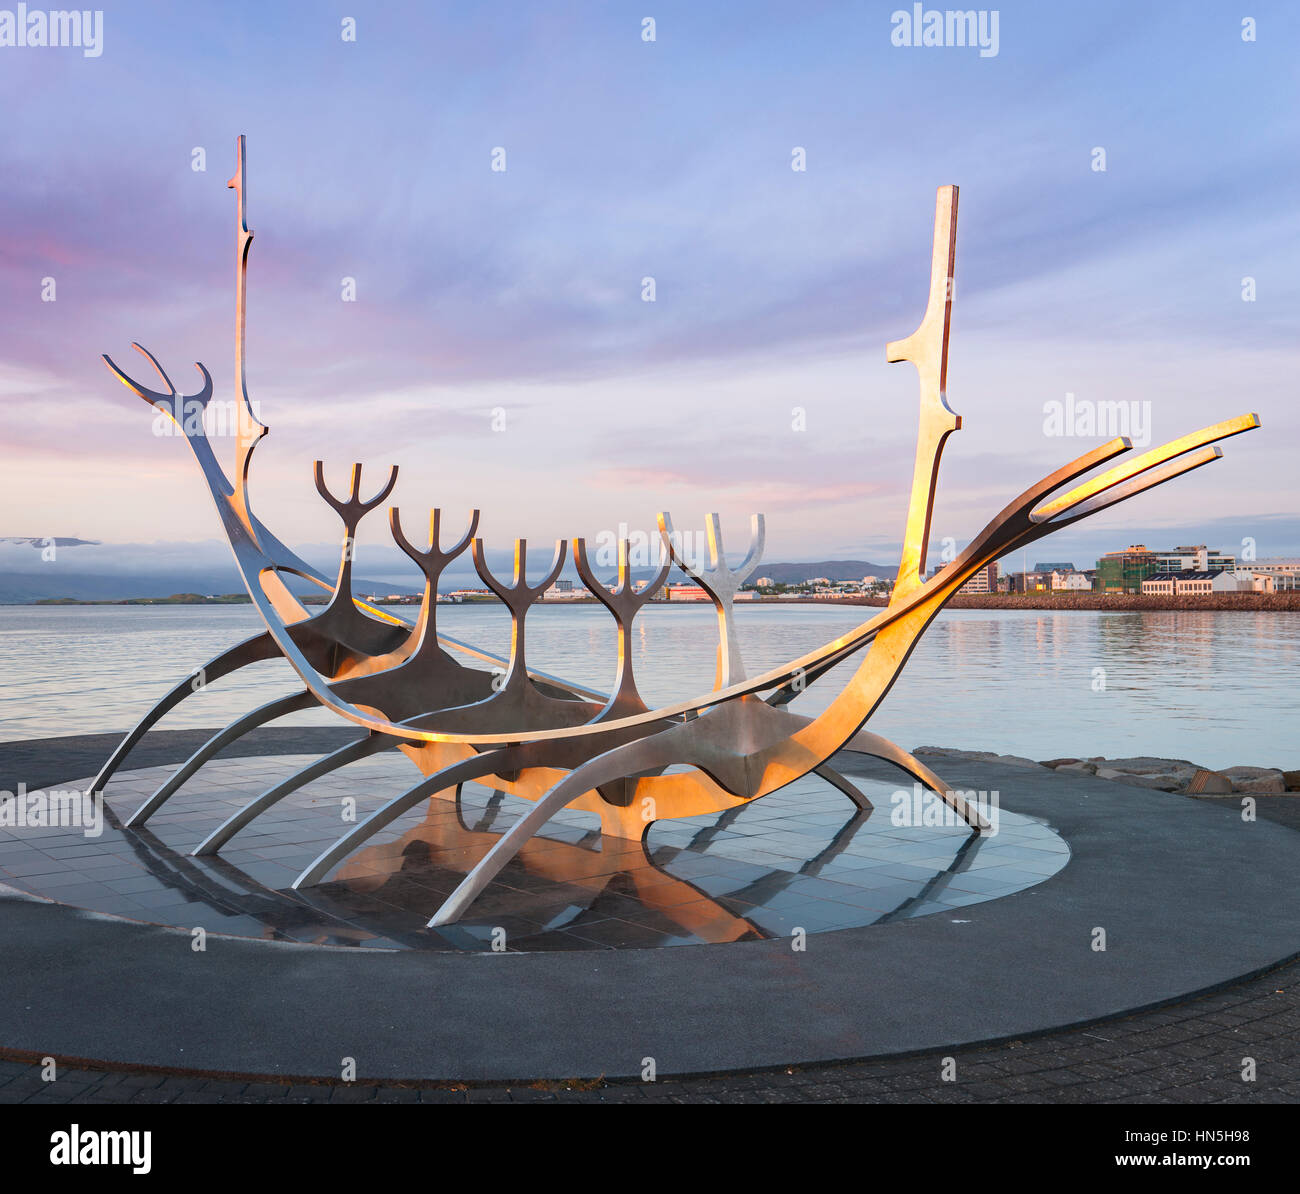 Reykjavik viking boat sculpture hi-res stock photography and images - Alamy